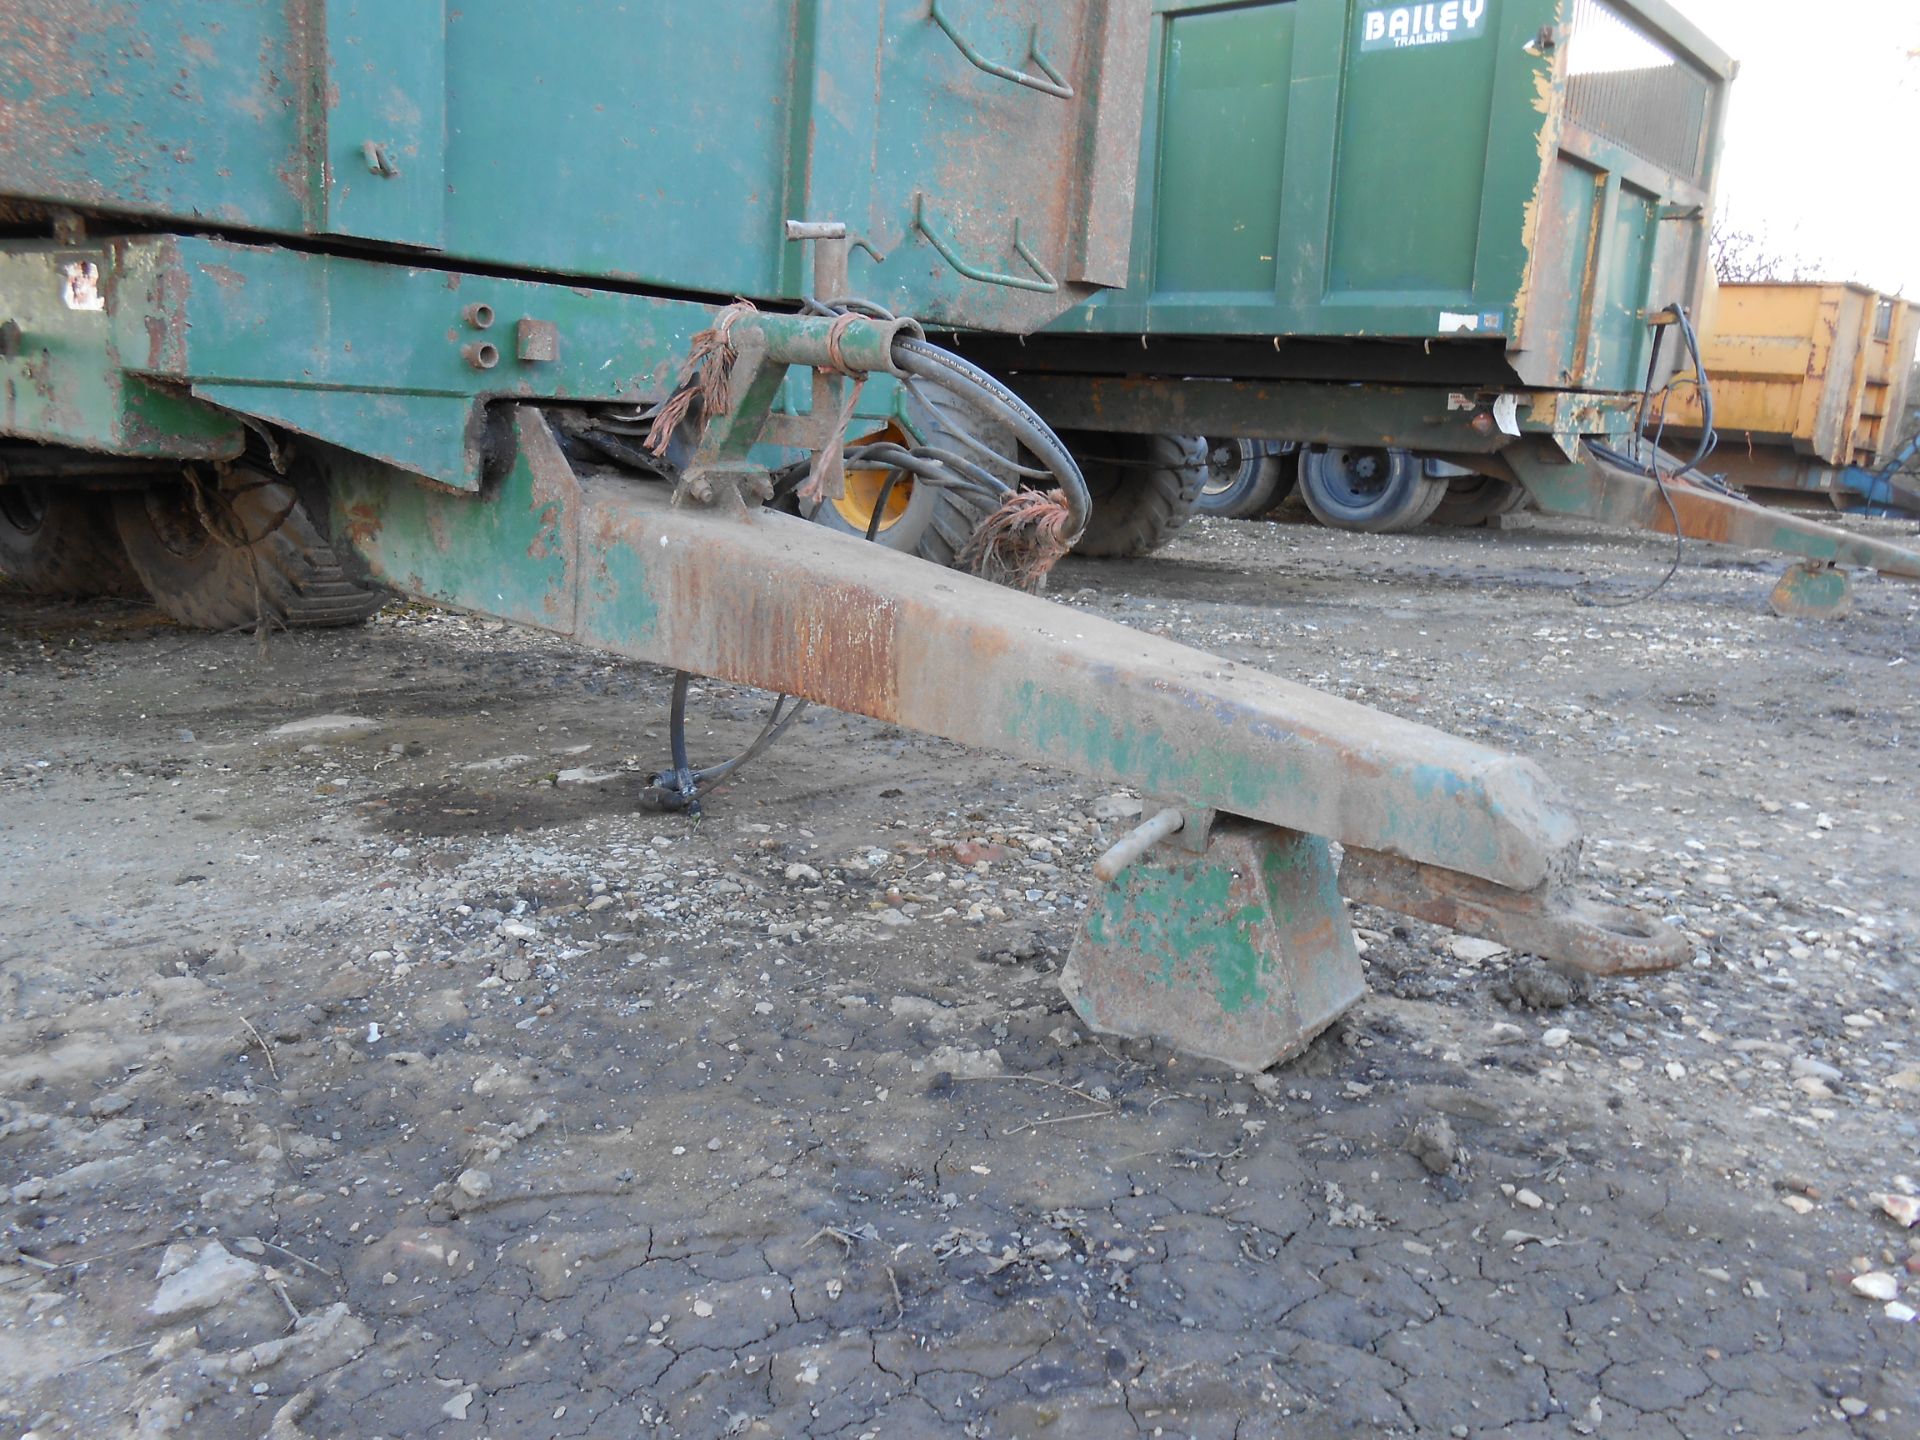 Bailey twin axle beet dump trailer - Image 5 of 8